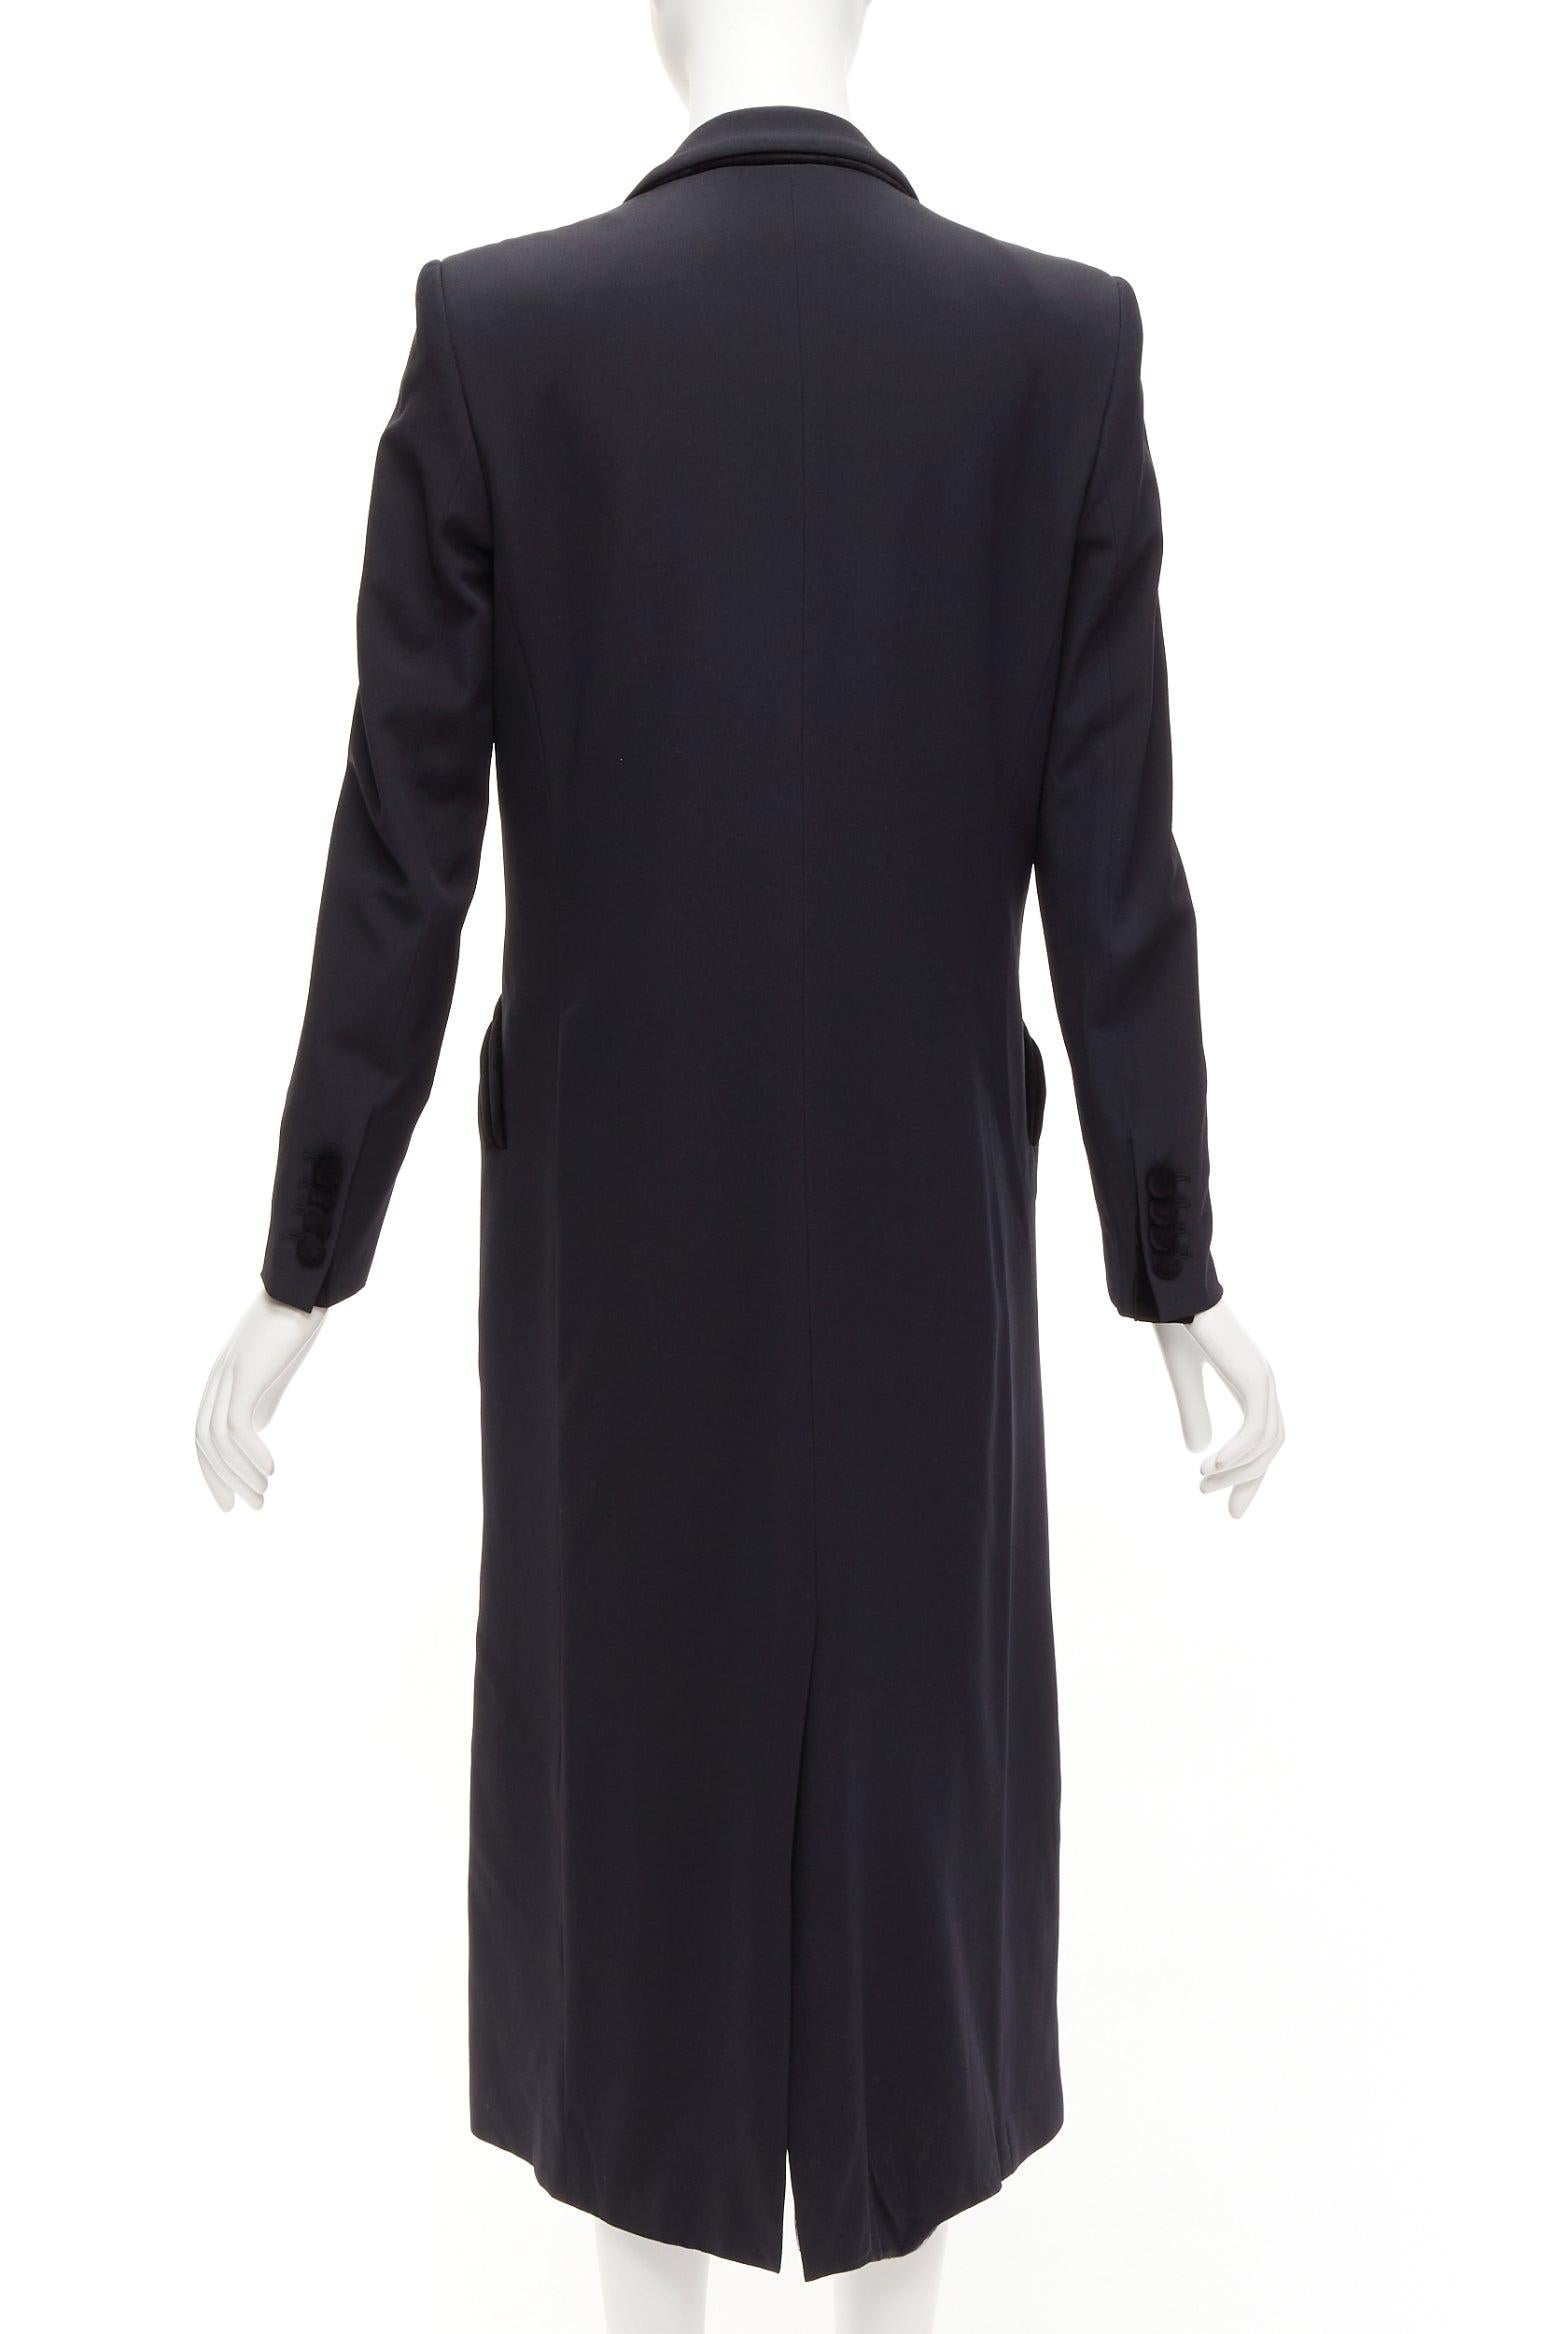 BLAZE MILANO Blazer Dress black curved pockets double breasted coat Sz.1 XS For Sale 2